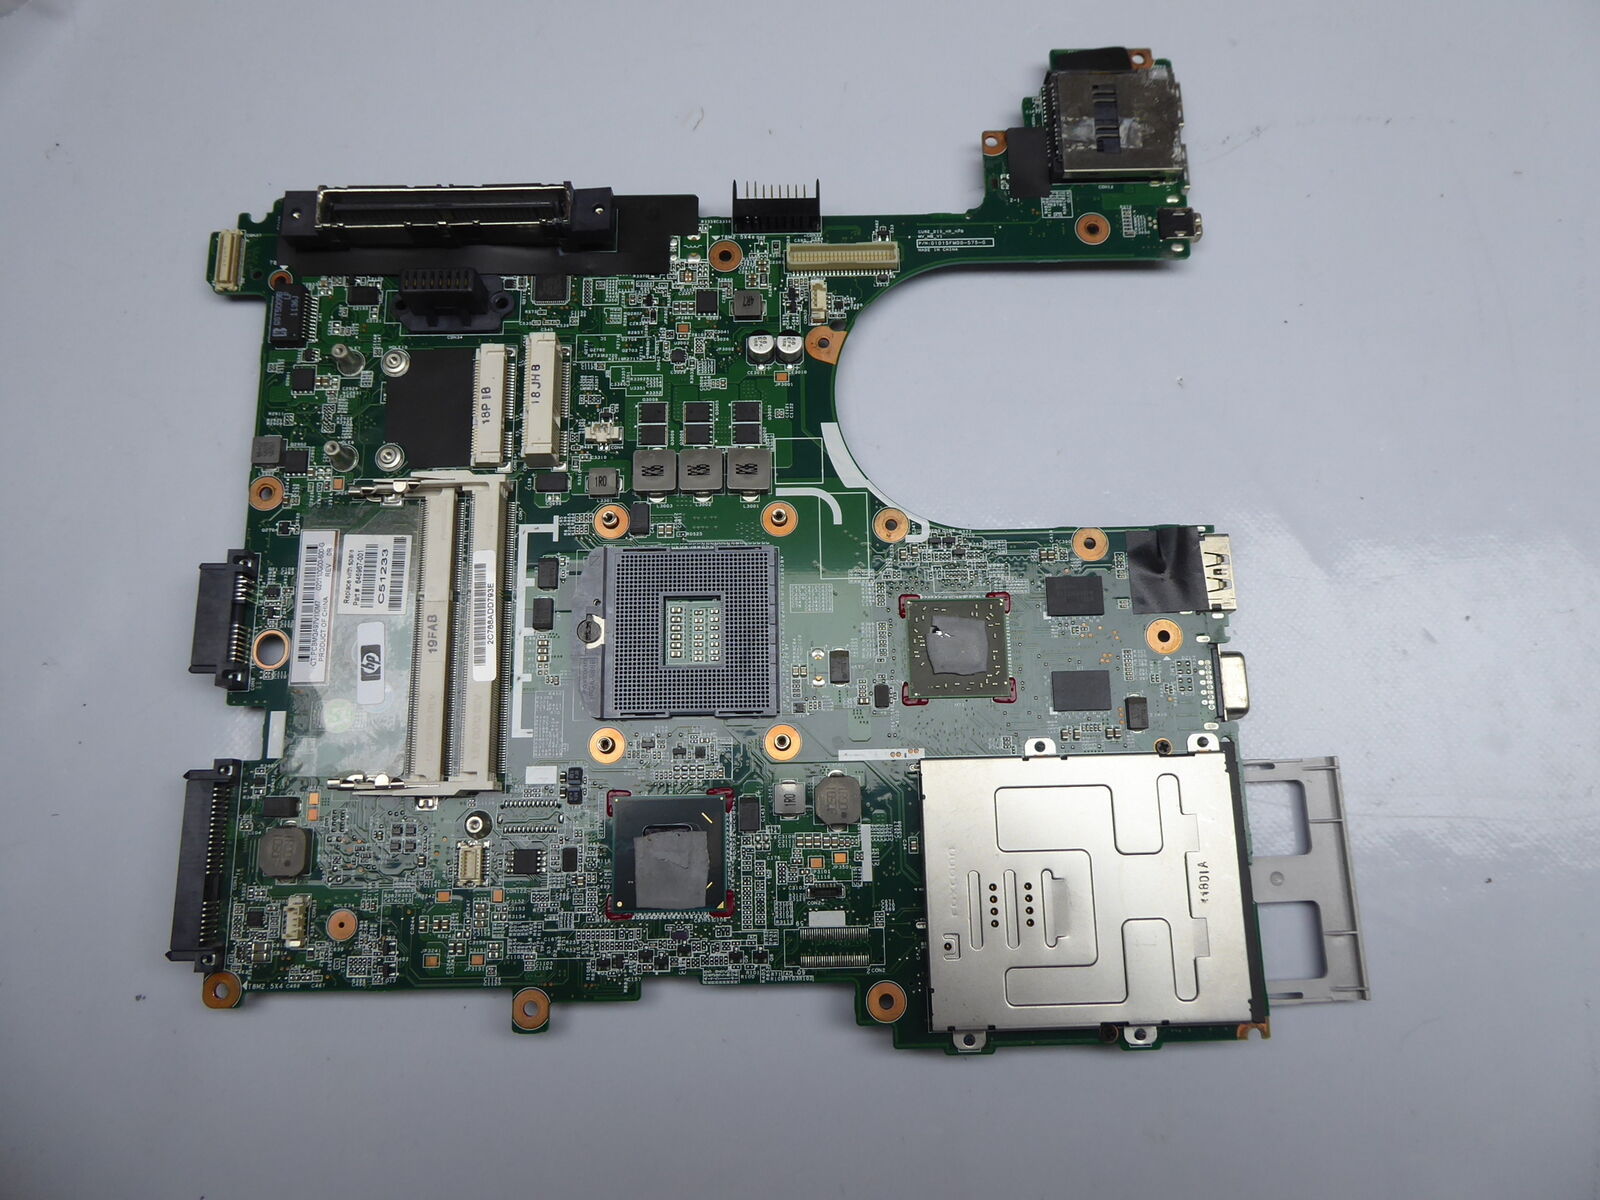 HP EliteBook 8560p Motherboard Motherboard 646967-001 Marke: HP/Compaq Produktart: Mainboard Herstellernumme